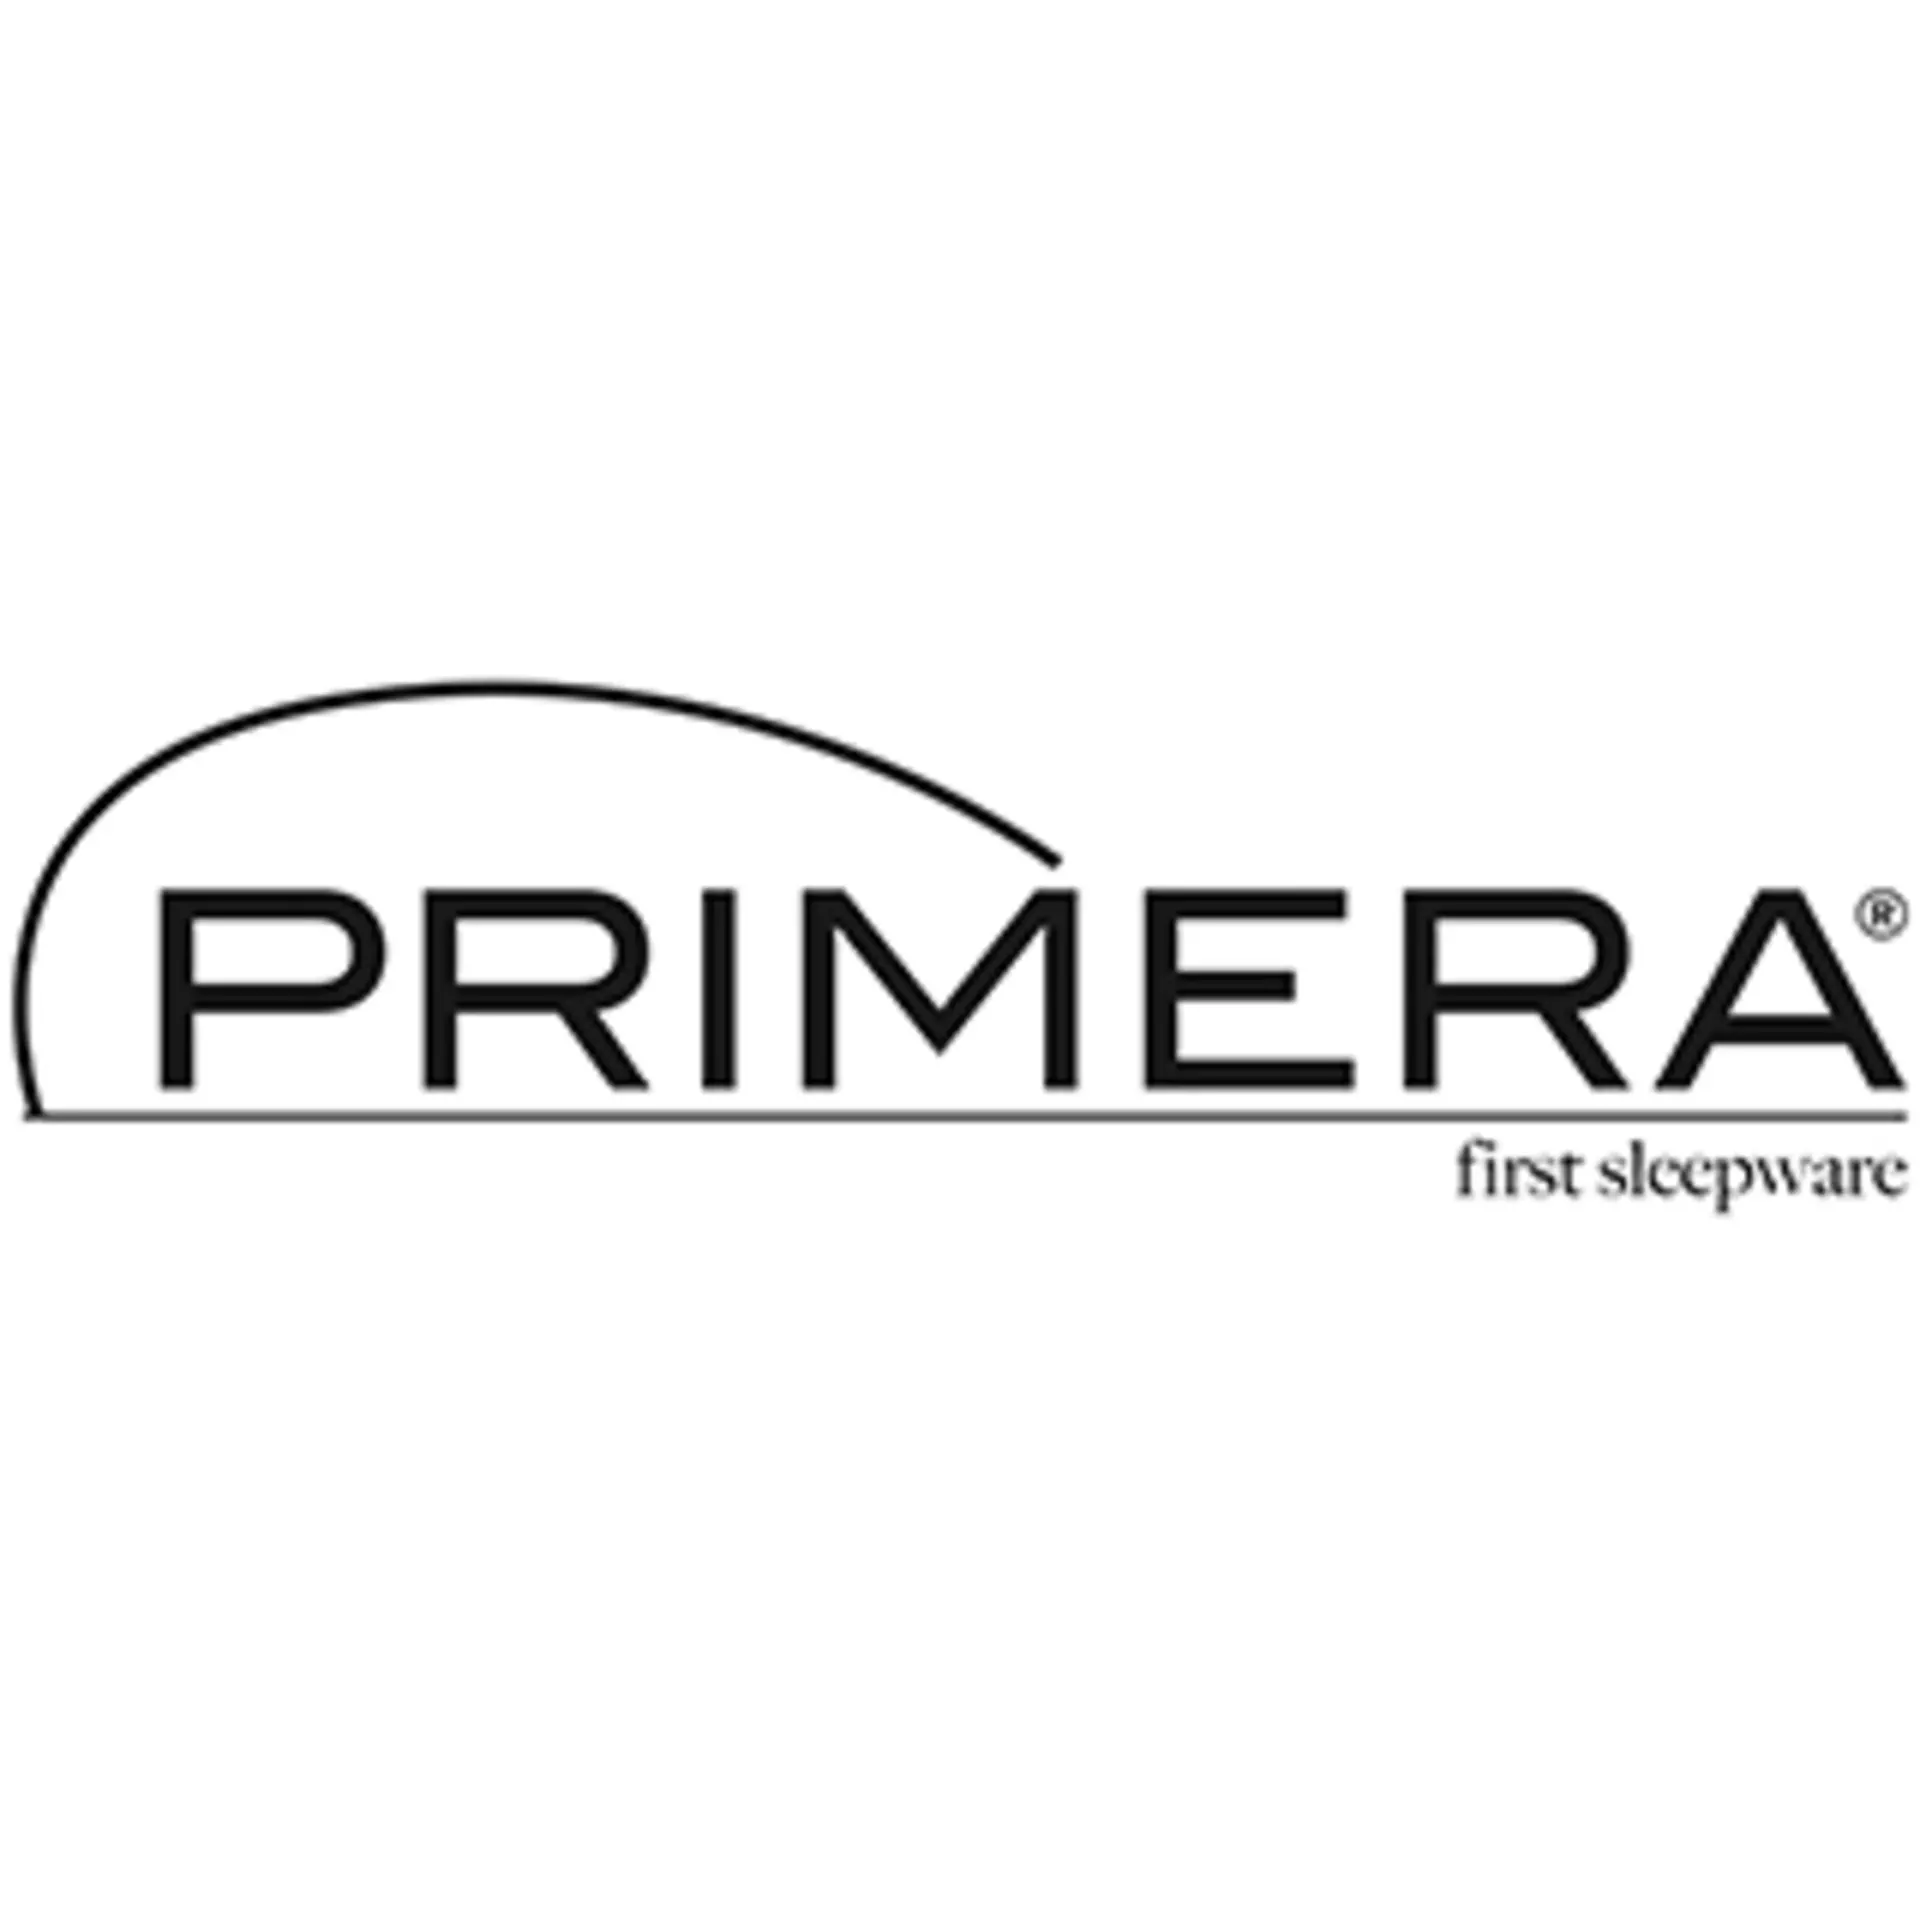 Logo "PRIMERA - first sleepware"